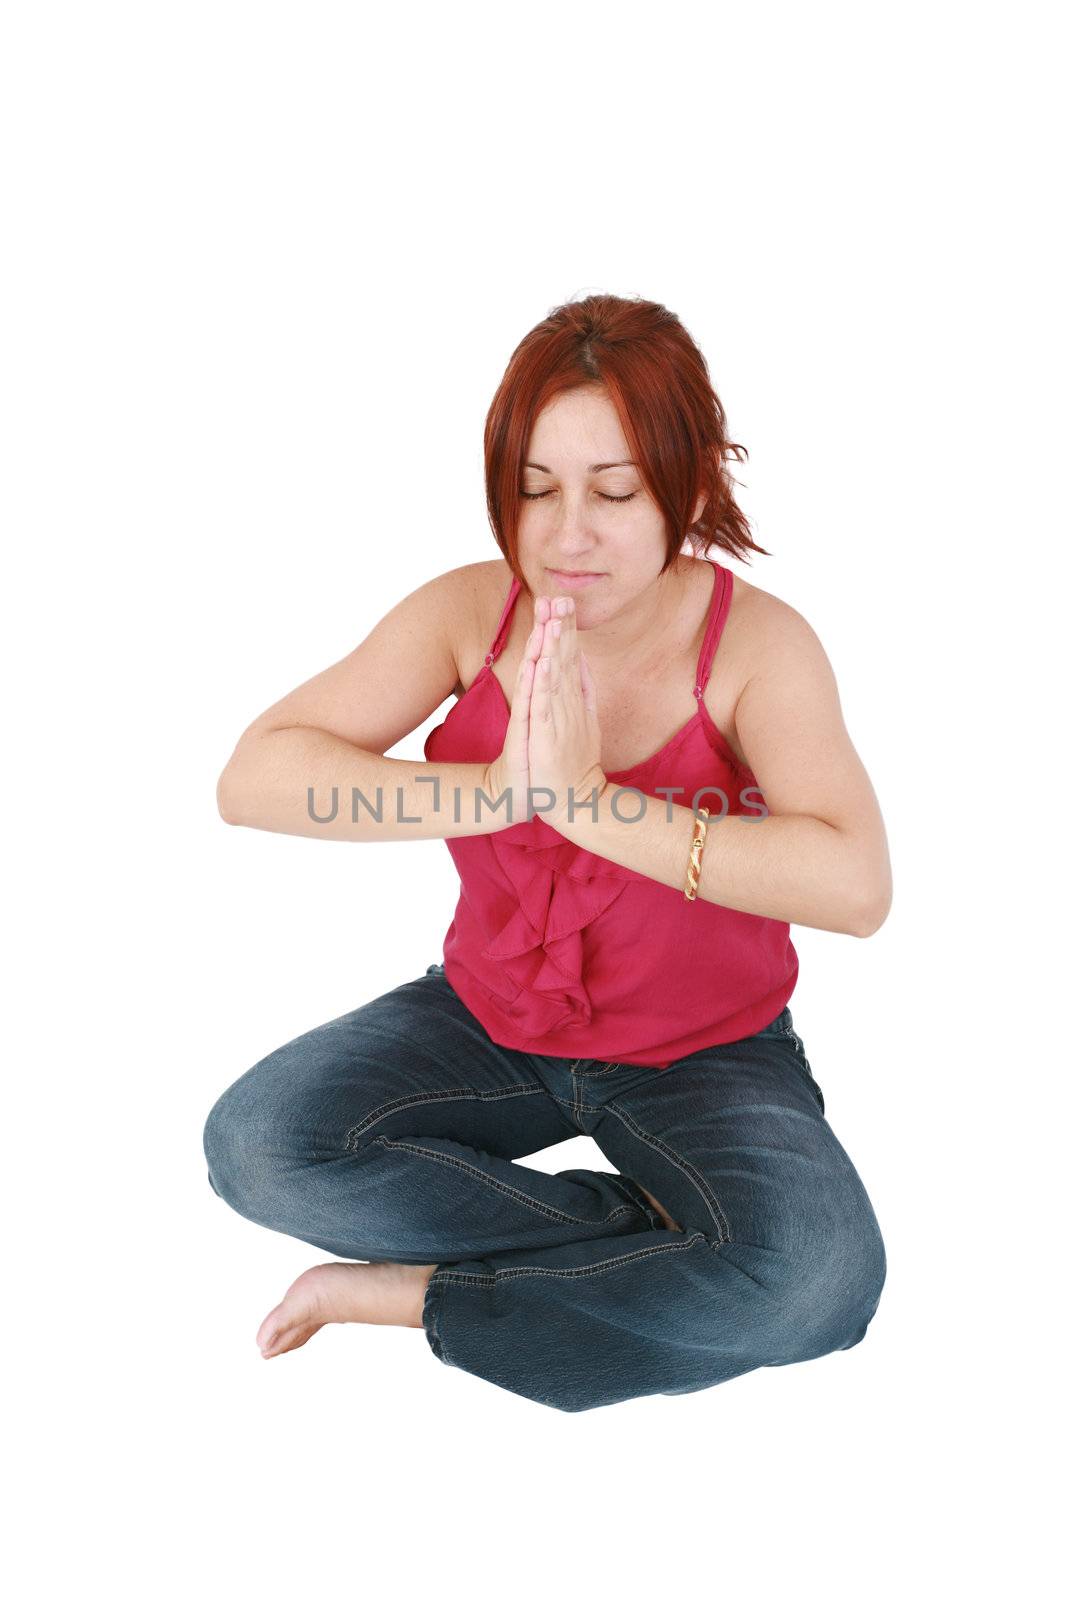 Calm woman doing relaxing yoga exercises by dacasdo